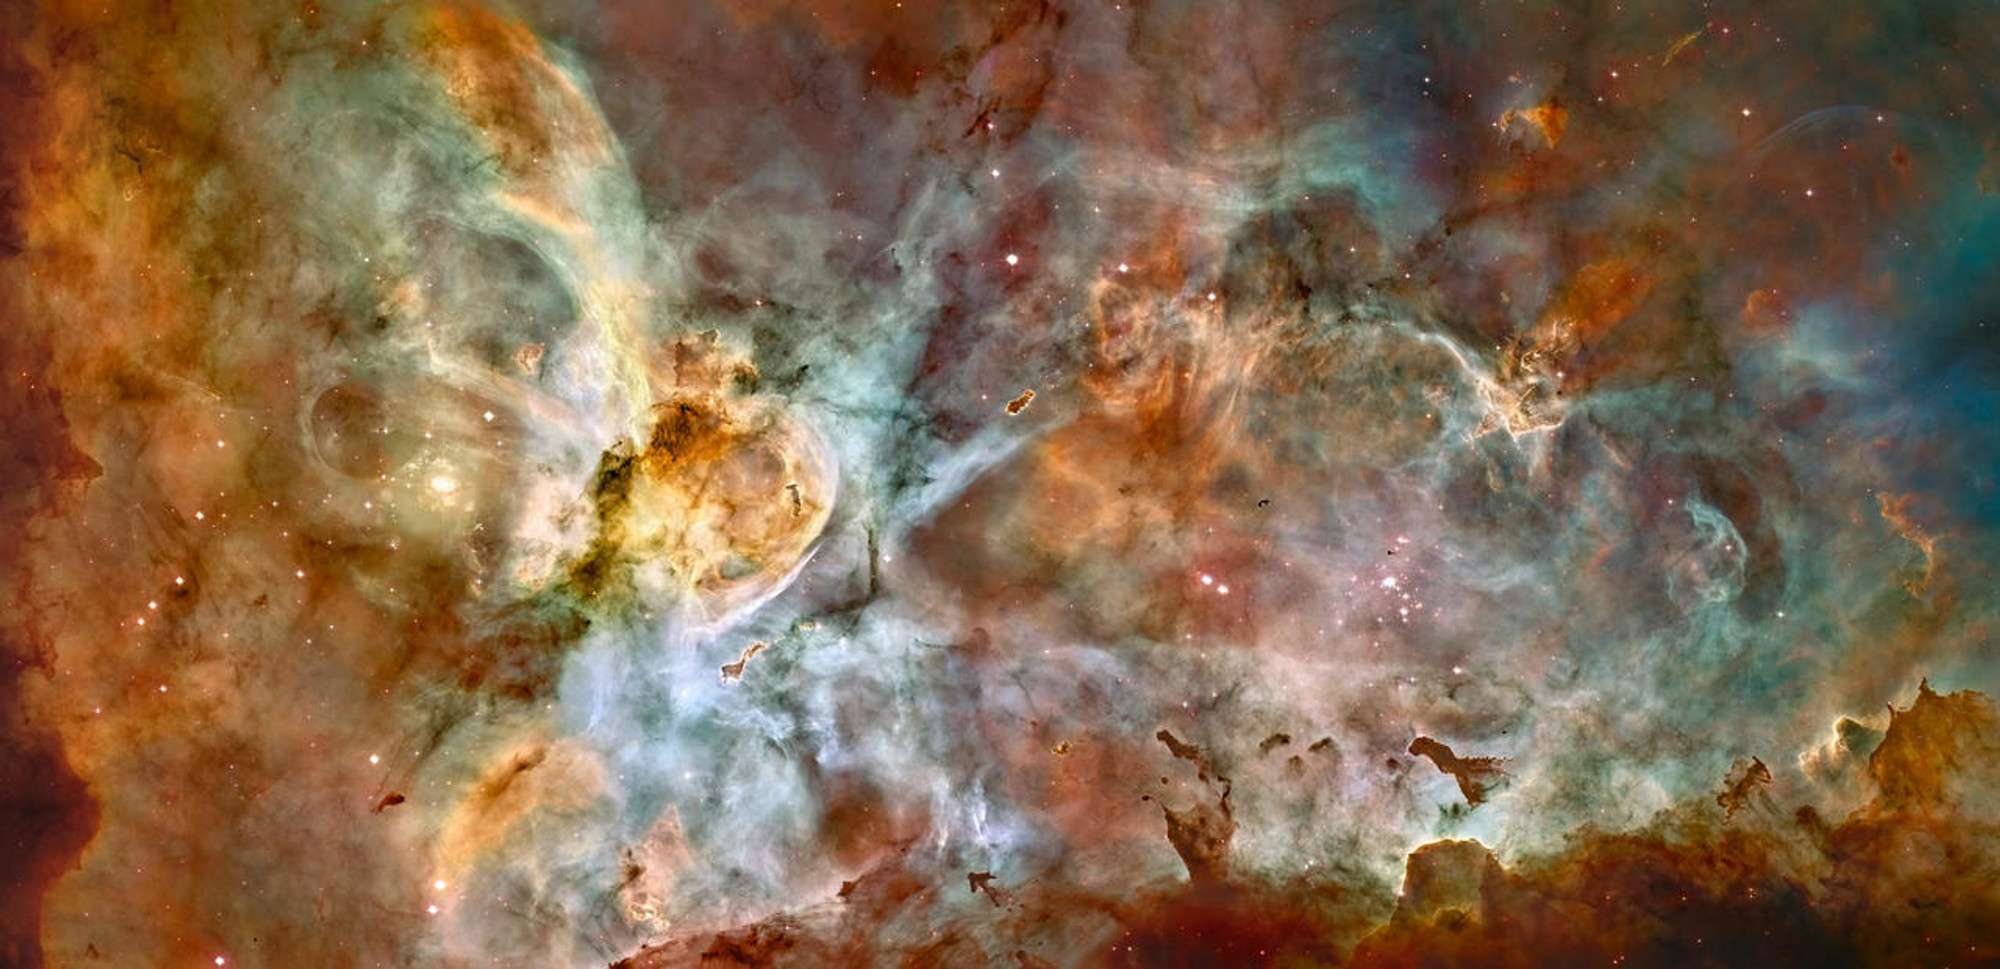 Carina Nebula - Star Birth Space Wall Mural, image 1, World Maps Online